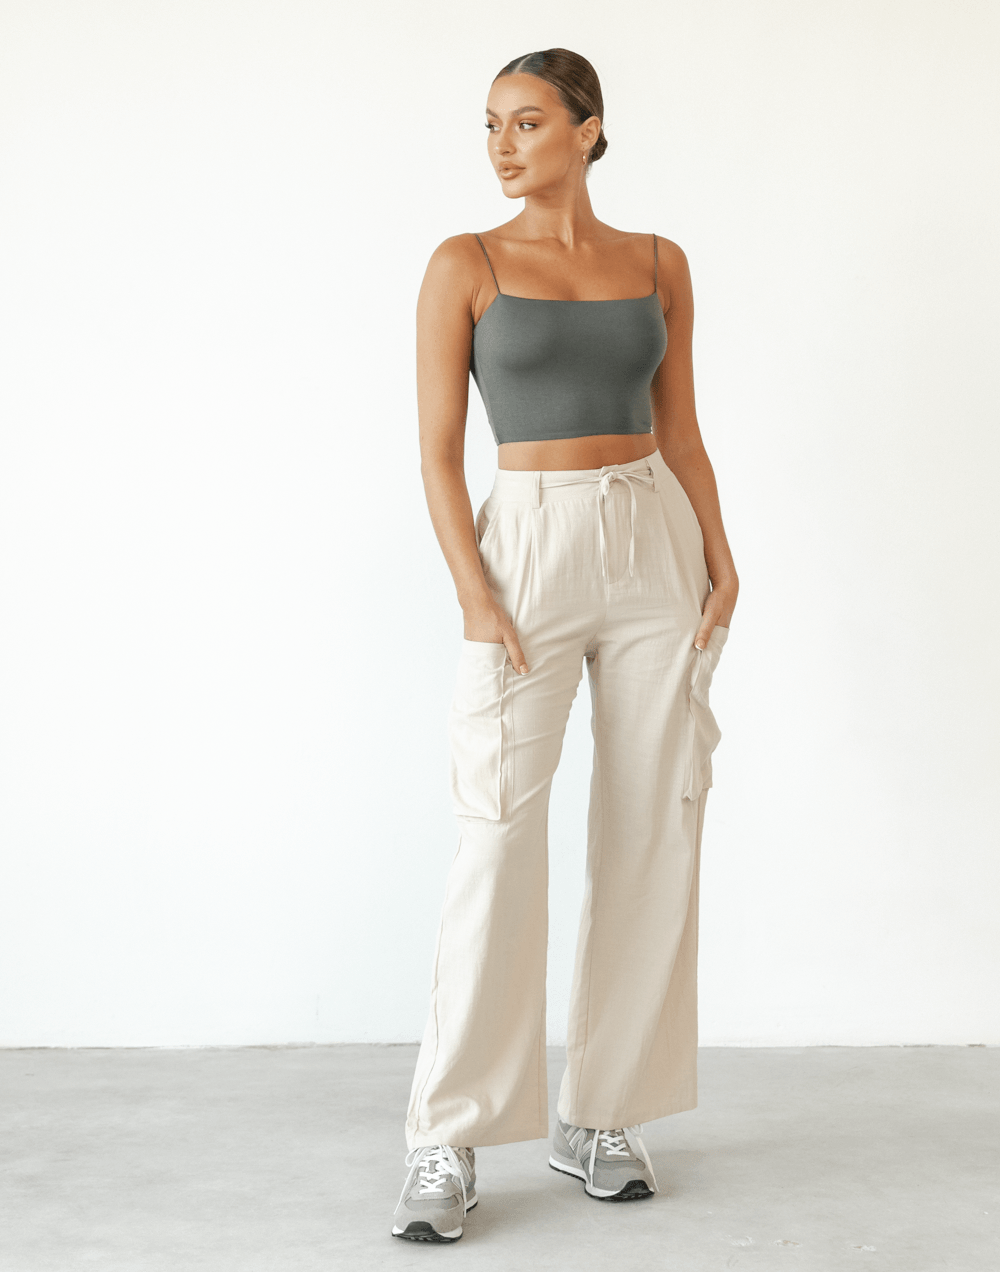 Tammy Crop Top (Khaki) - Basic Crop Top - Women's Top - Charcoal Clothing